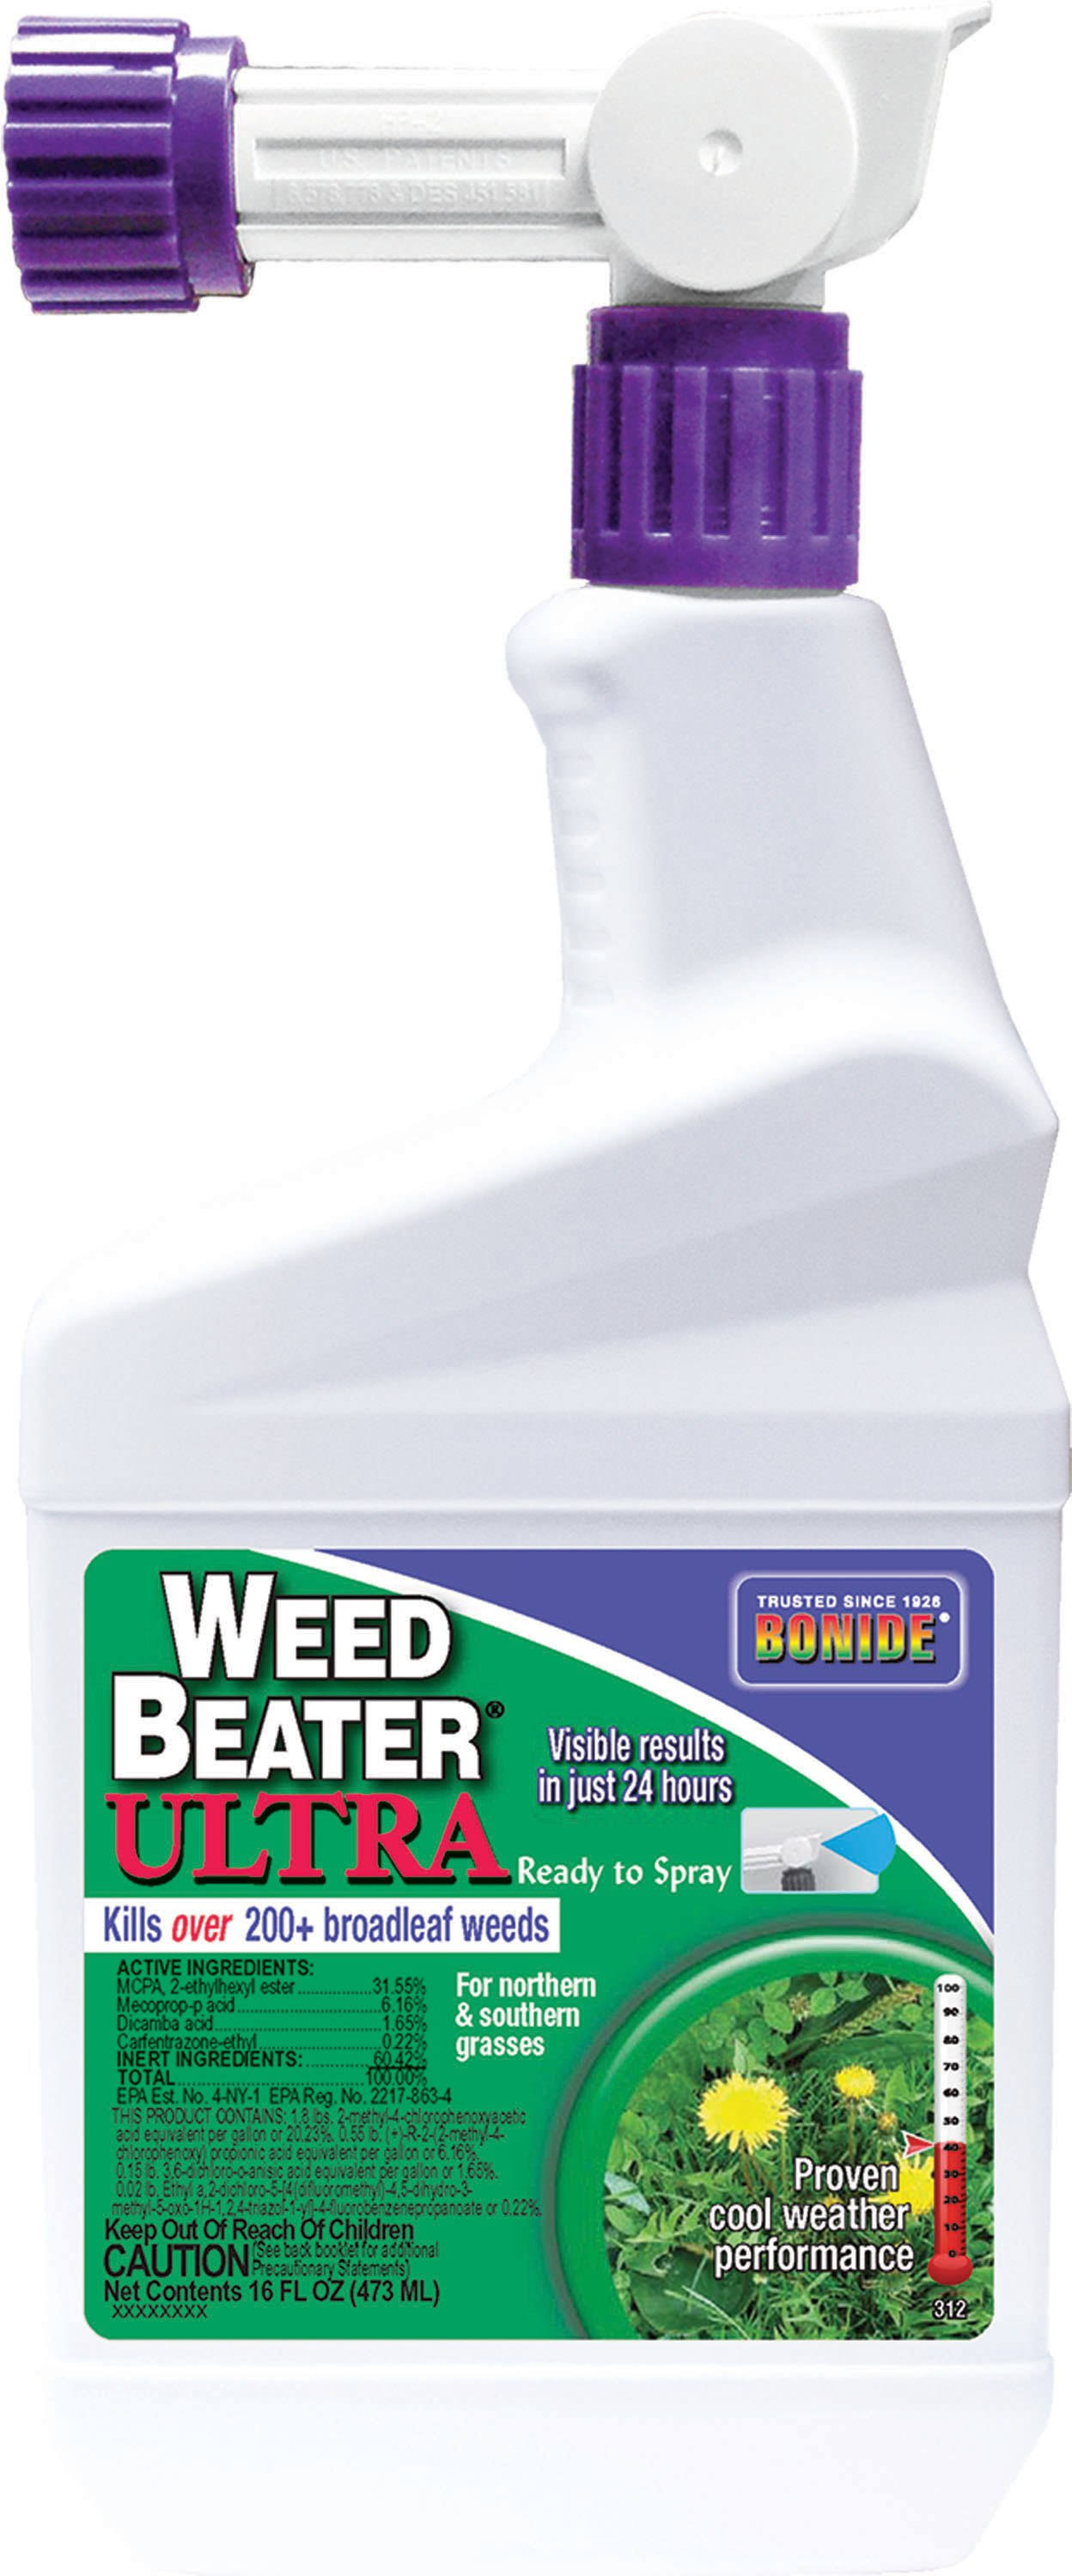 Bonide 312 Ready to Spray Weed Beater - 1 Pint